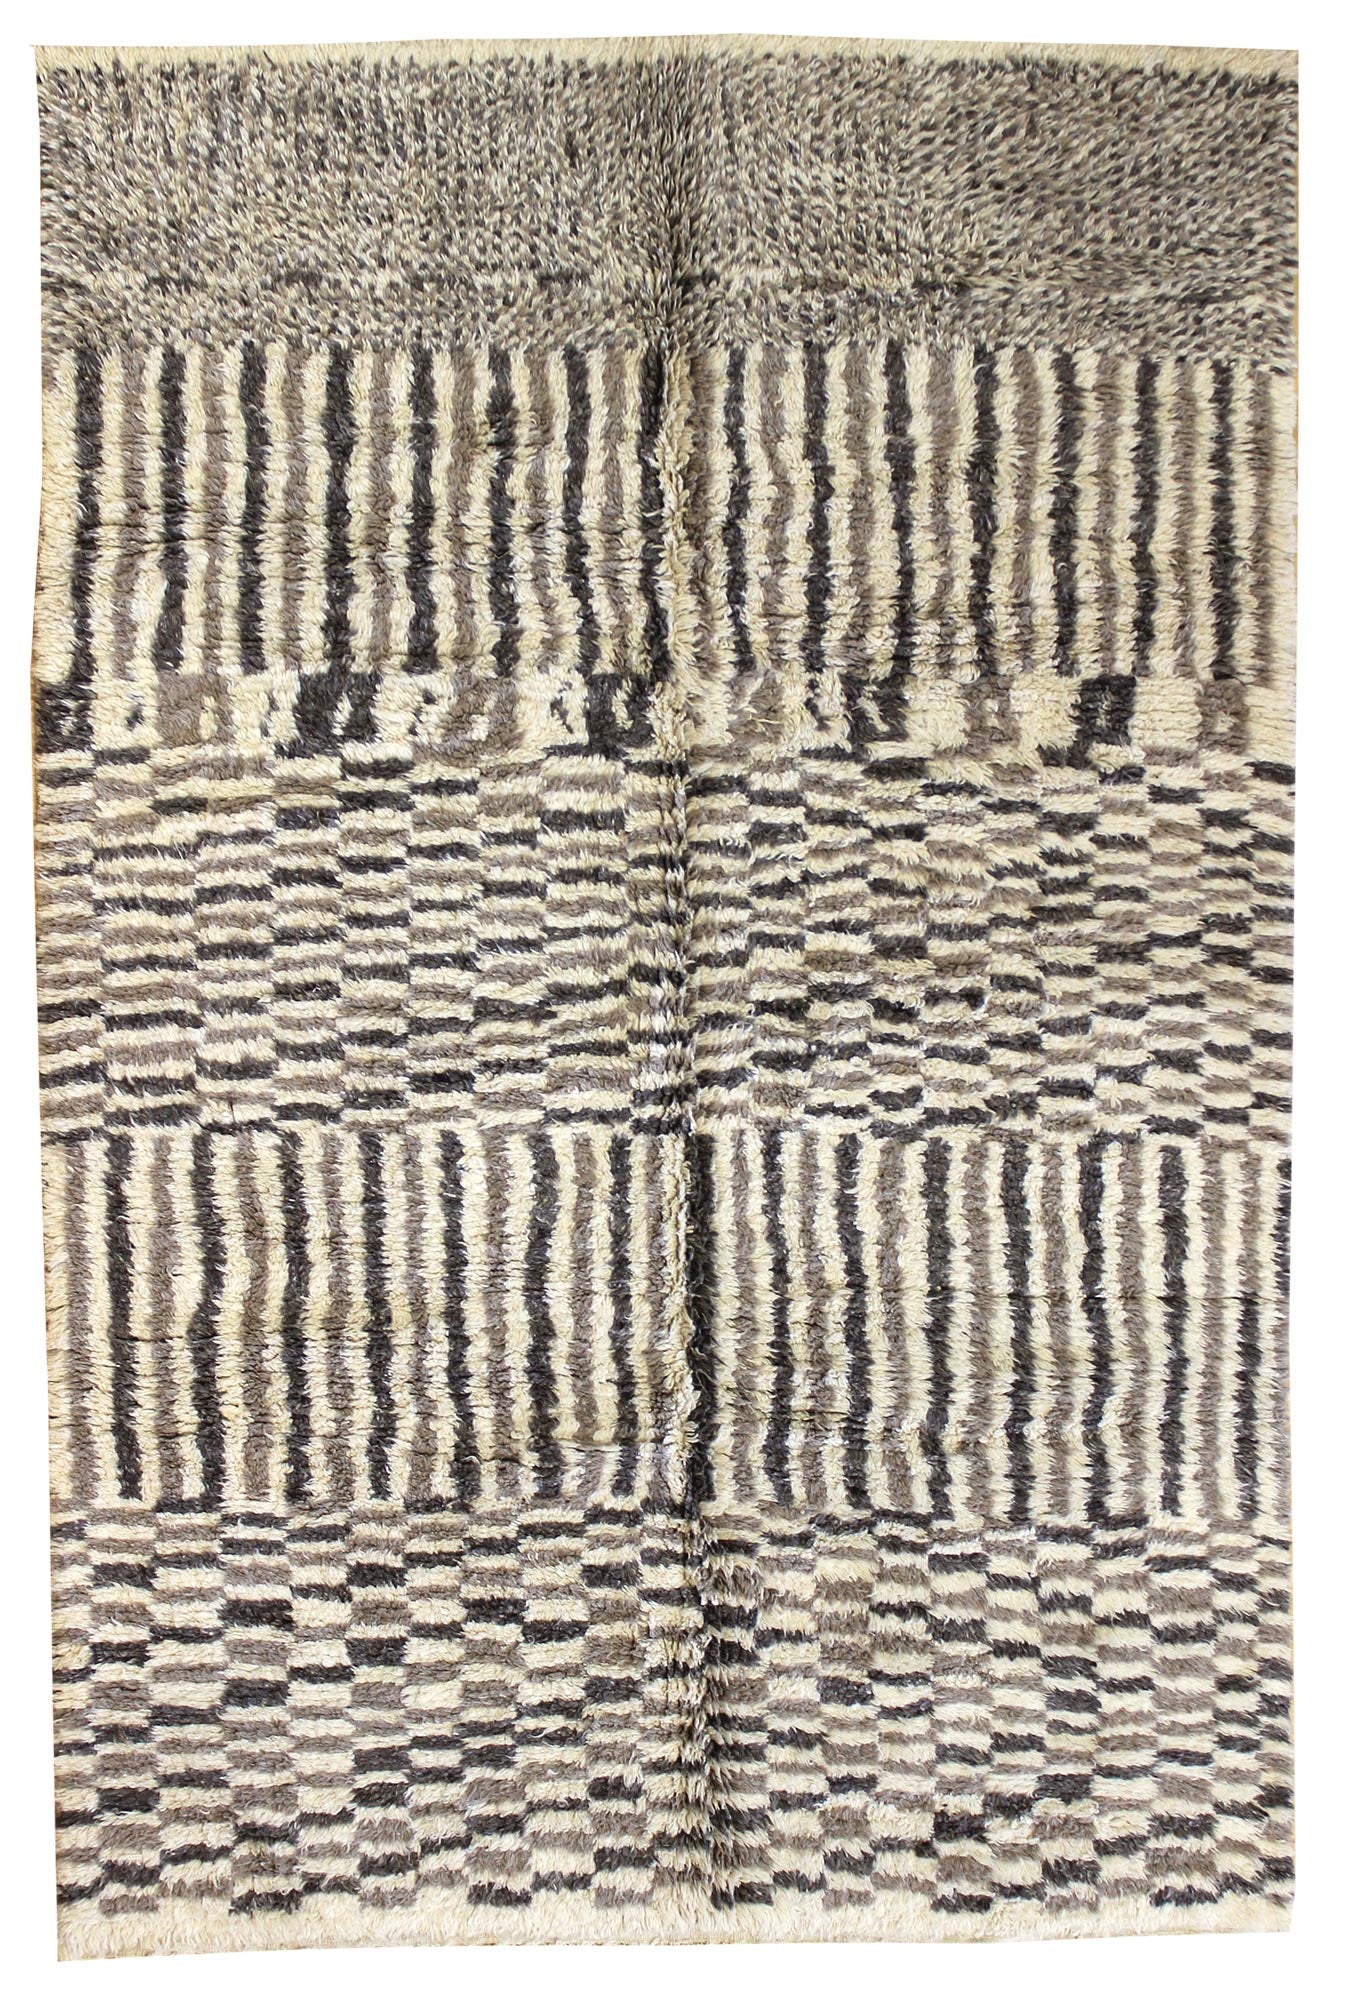 Beni Ouraine Handwoven Tribal Rug